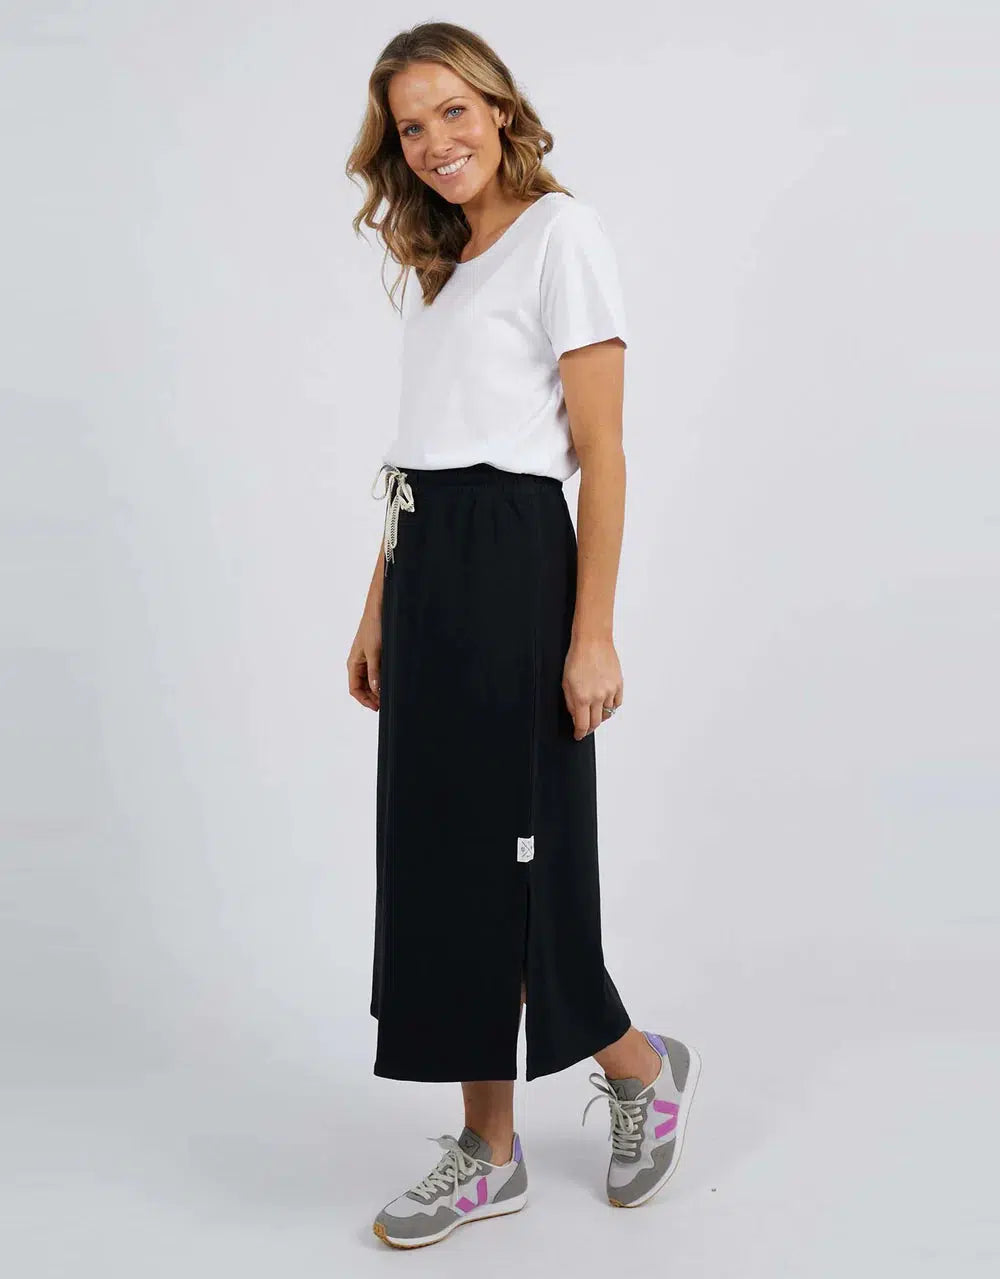 Travel Skirt - Black-Elm Lifestyle-Lima & Co